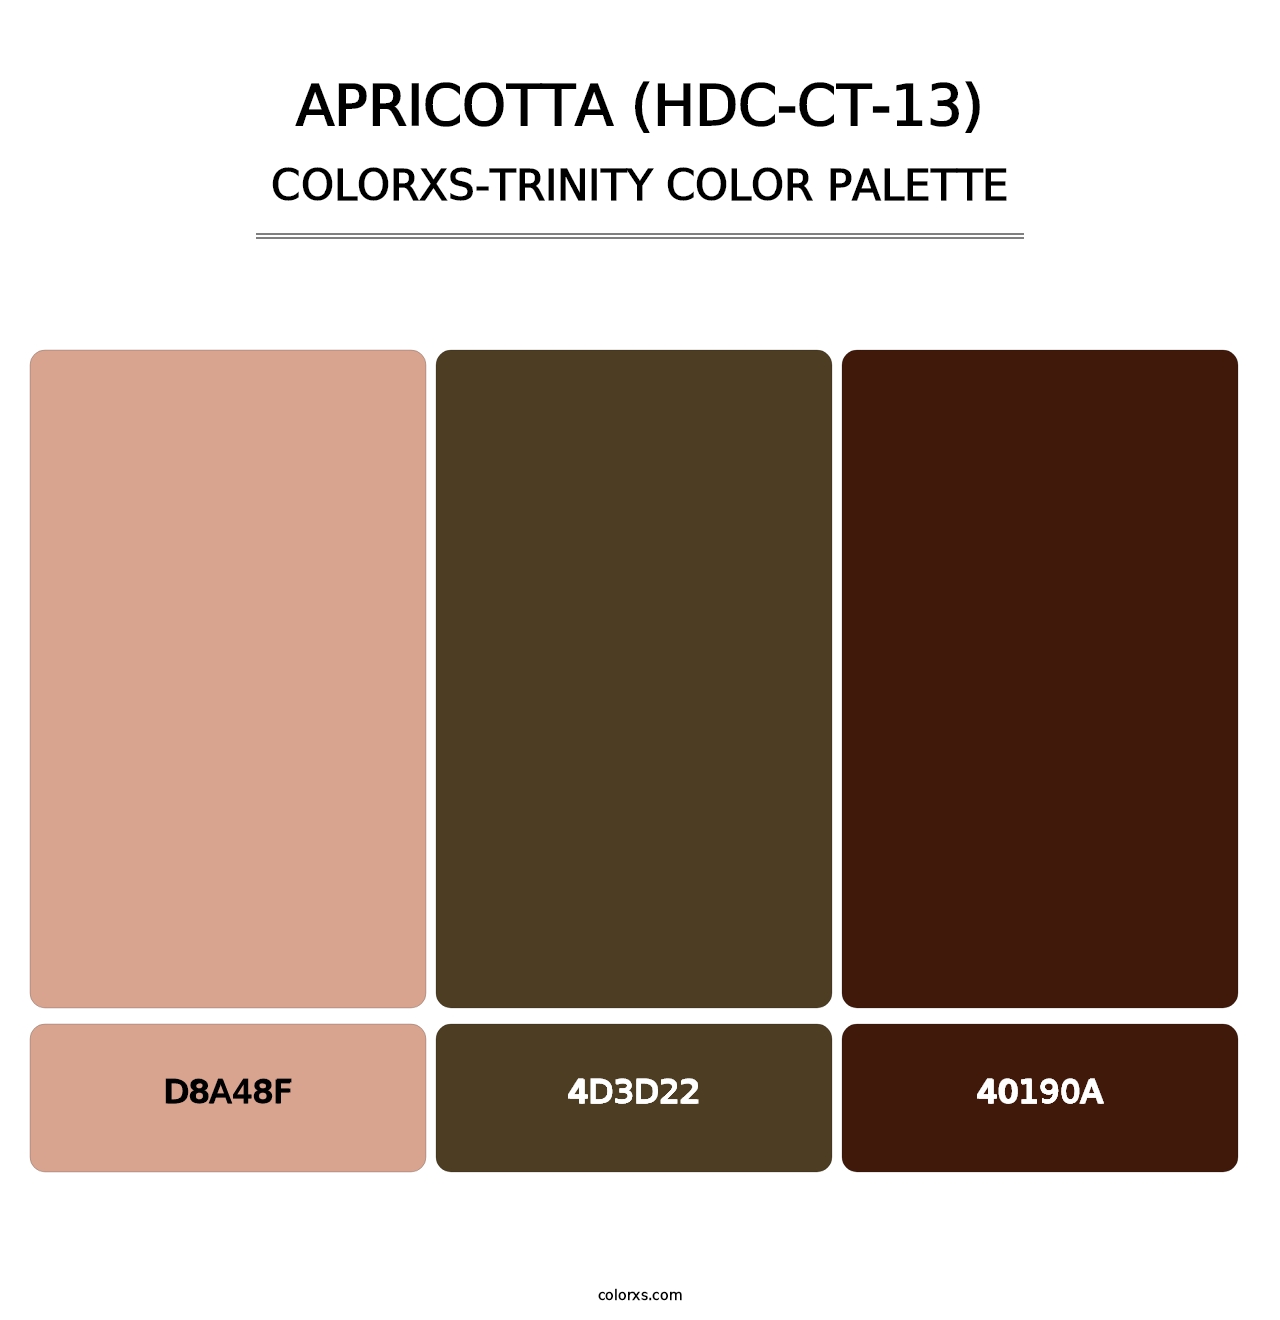 Apricotta (HDC-CT-13) - Colorxs Trinity Palette